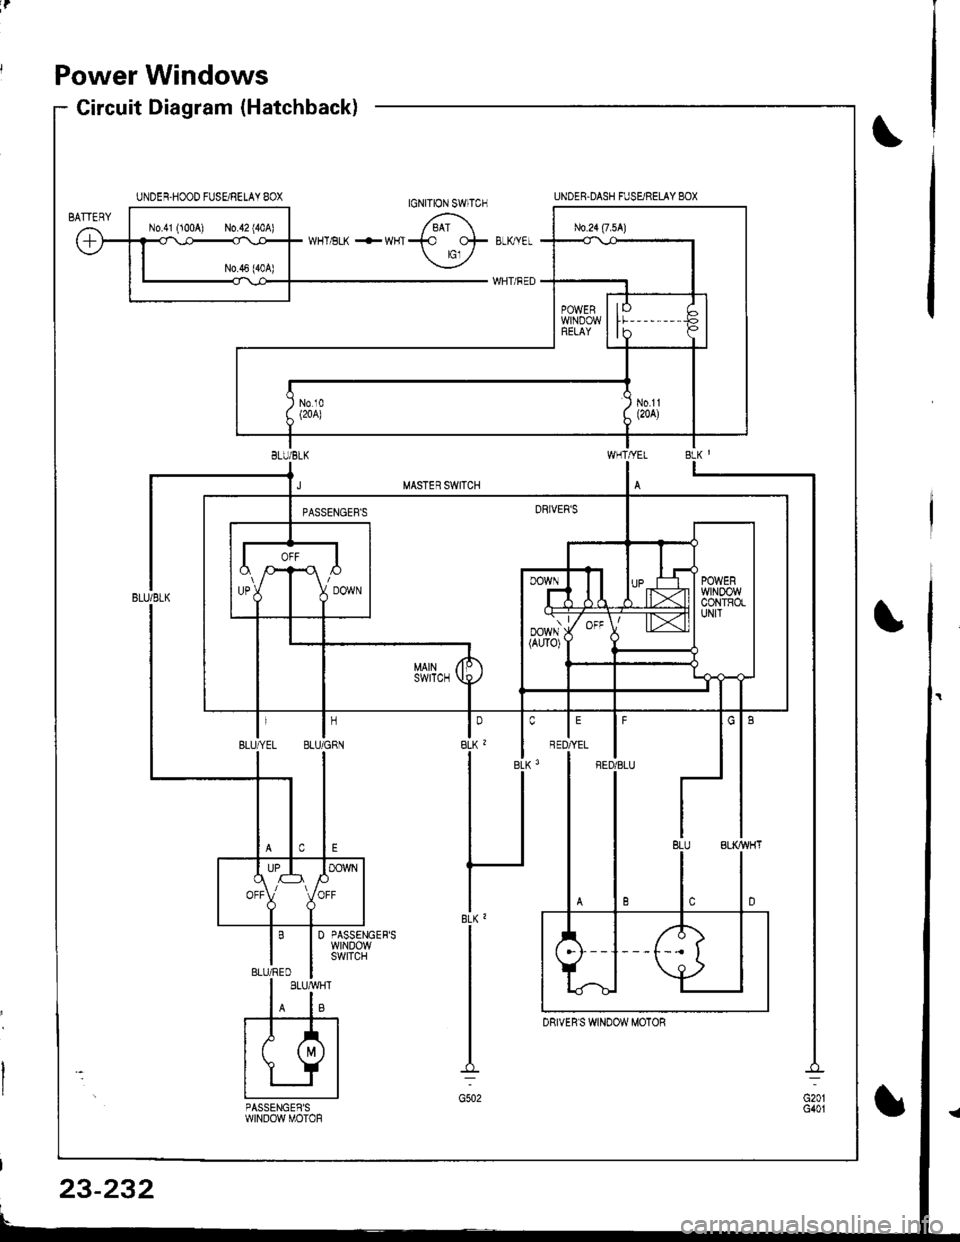 HONDA INTEGRA 1998 4.G Workshop Manual ir
Power Windows
Circuit Diagram (Hatchback)
IFED/BLU
DRIVERS WINDOW MOTOR
23-232 